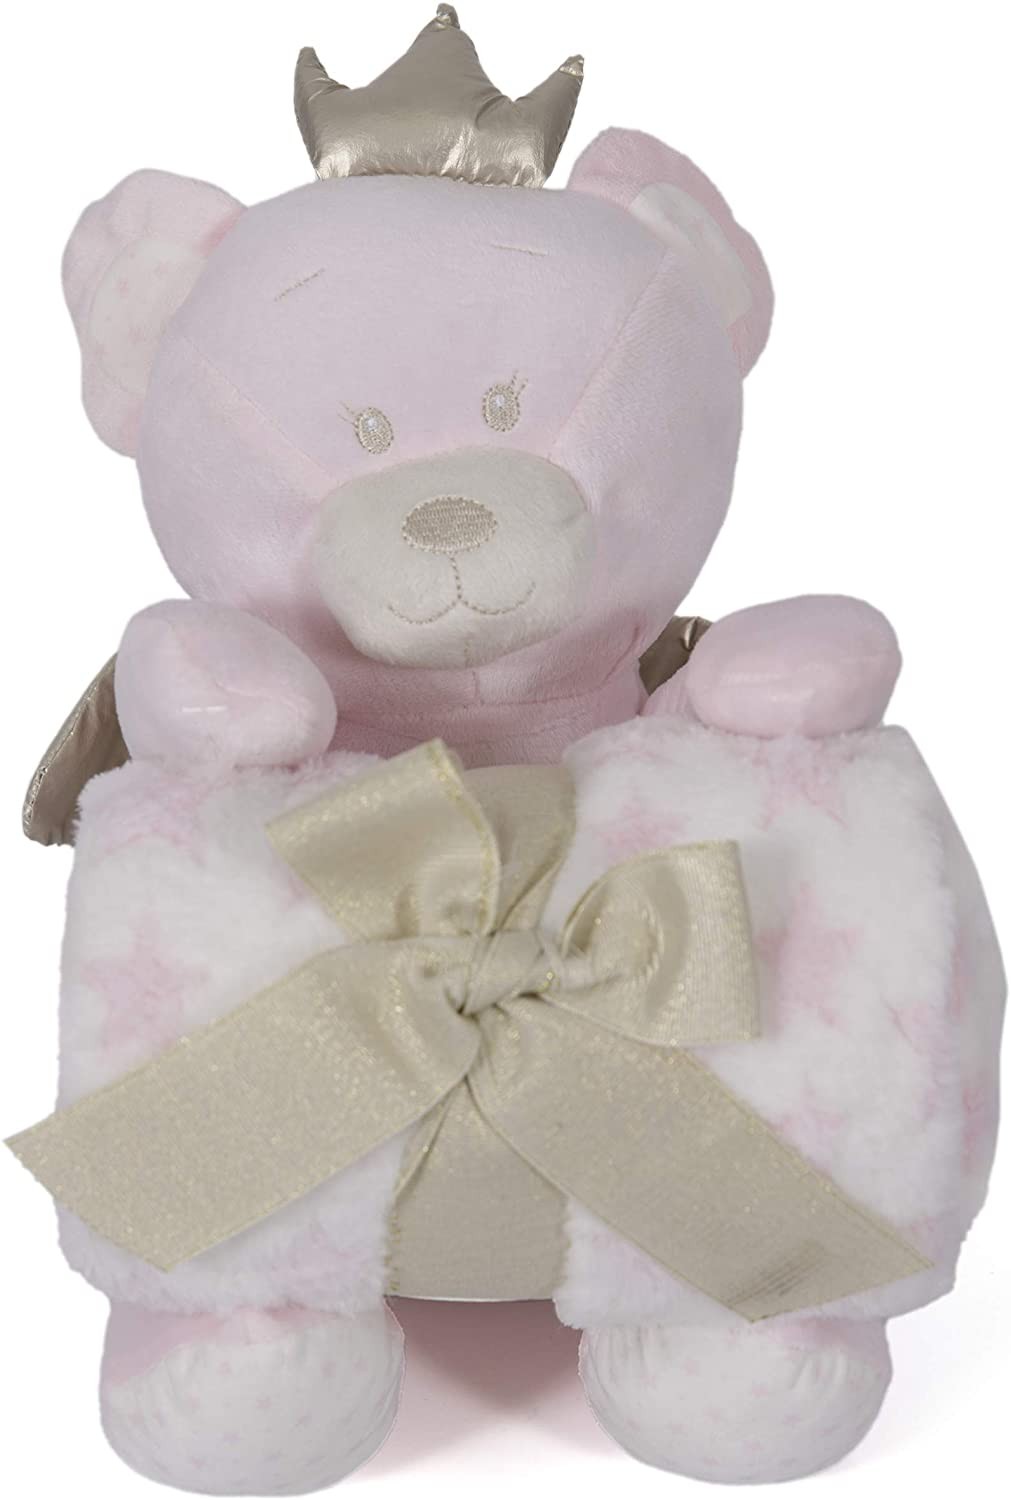 100% algodón, 85 x 85 cm, reversible Manta para cochecito de bebé Minky color azul claro diseño de oso de peluche 